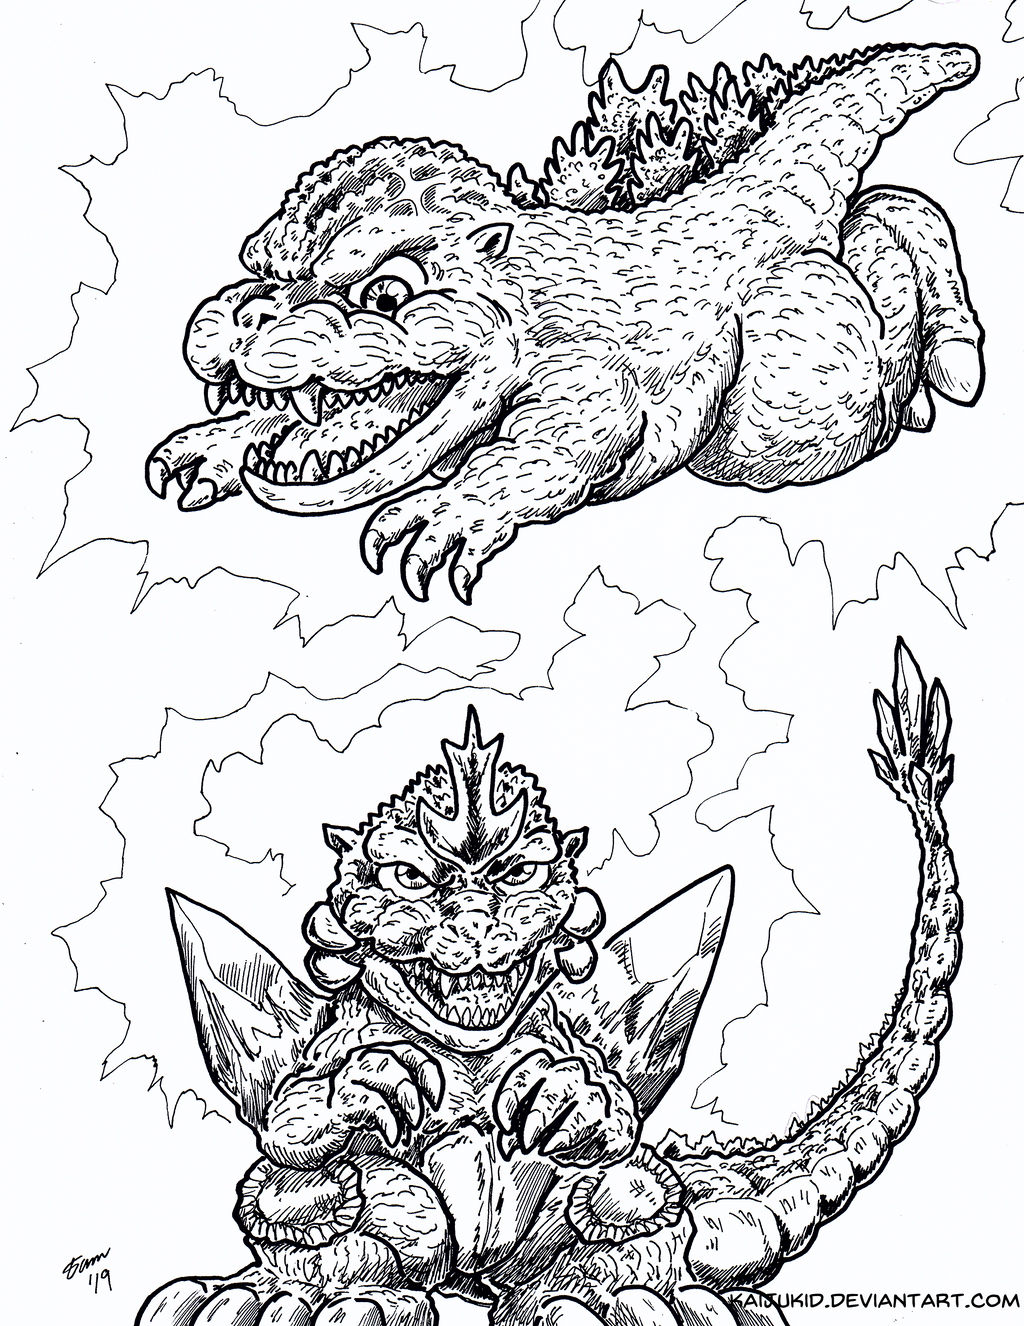 Kaiju Coloring Book: Chibi Spacegodzilla Owns by KaijuKid on DeviantArt